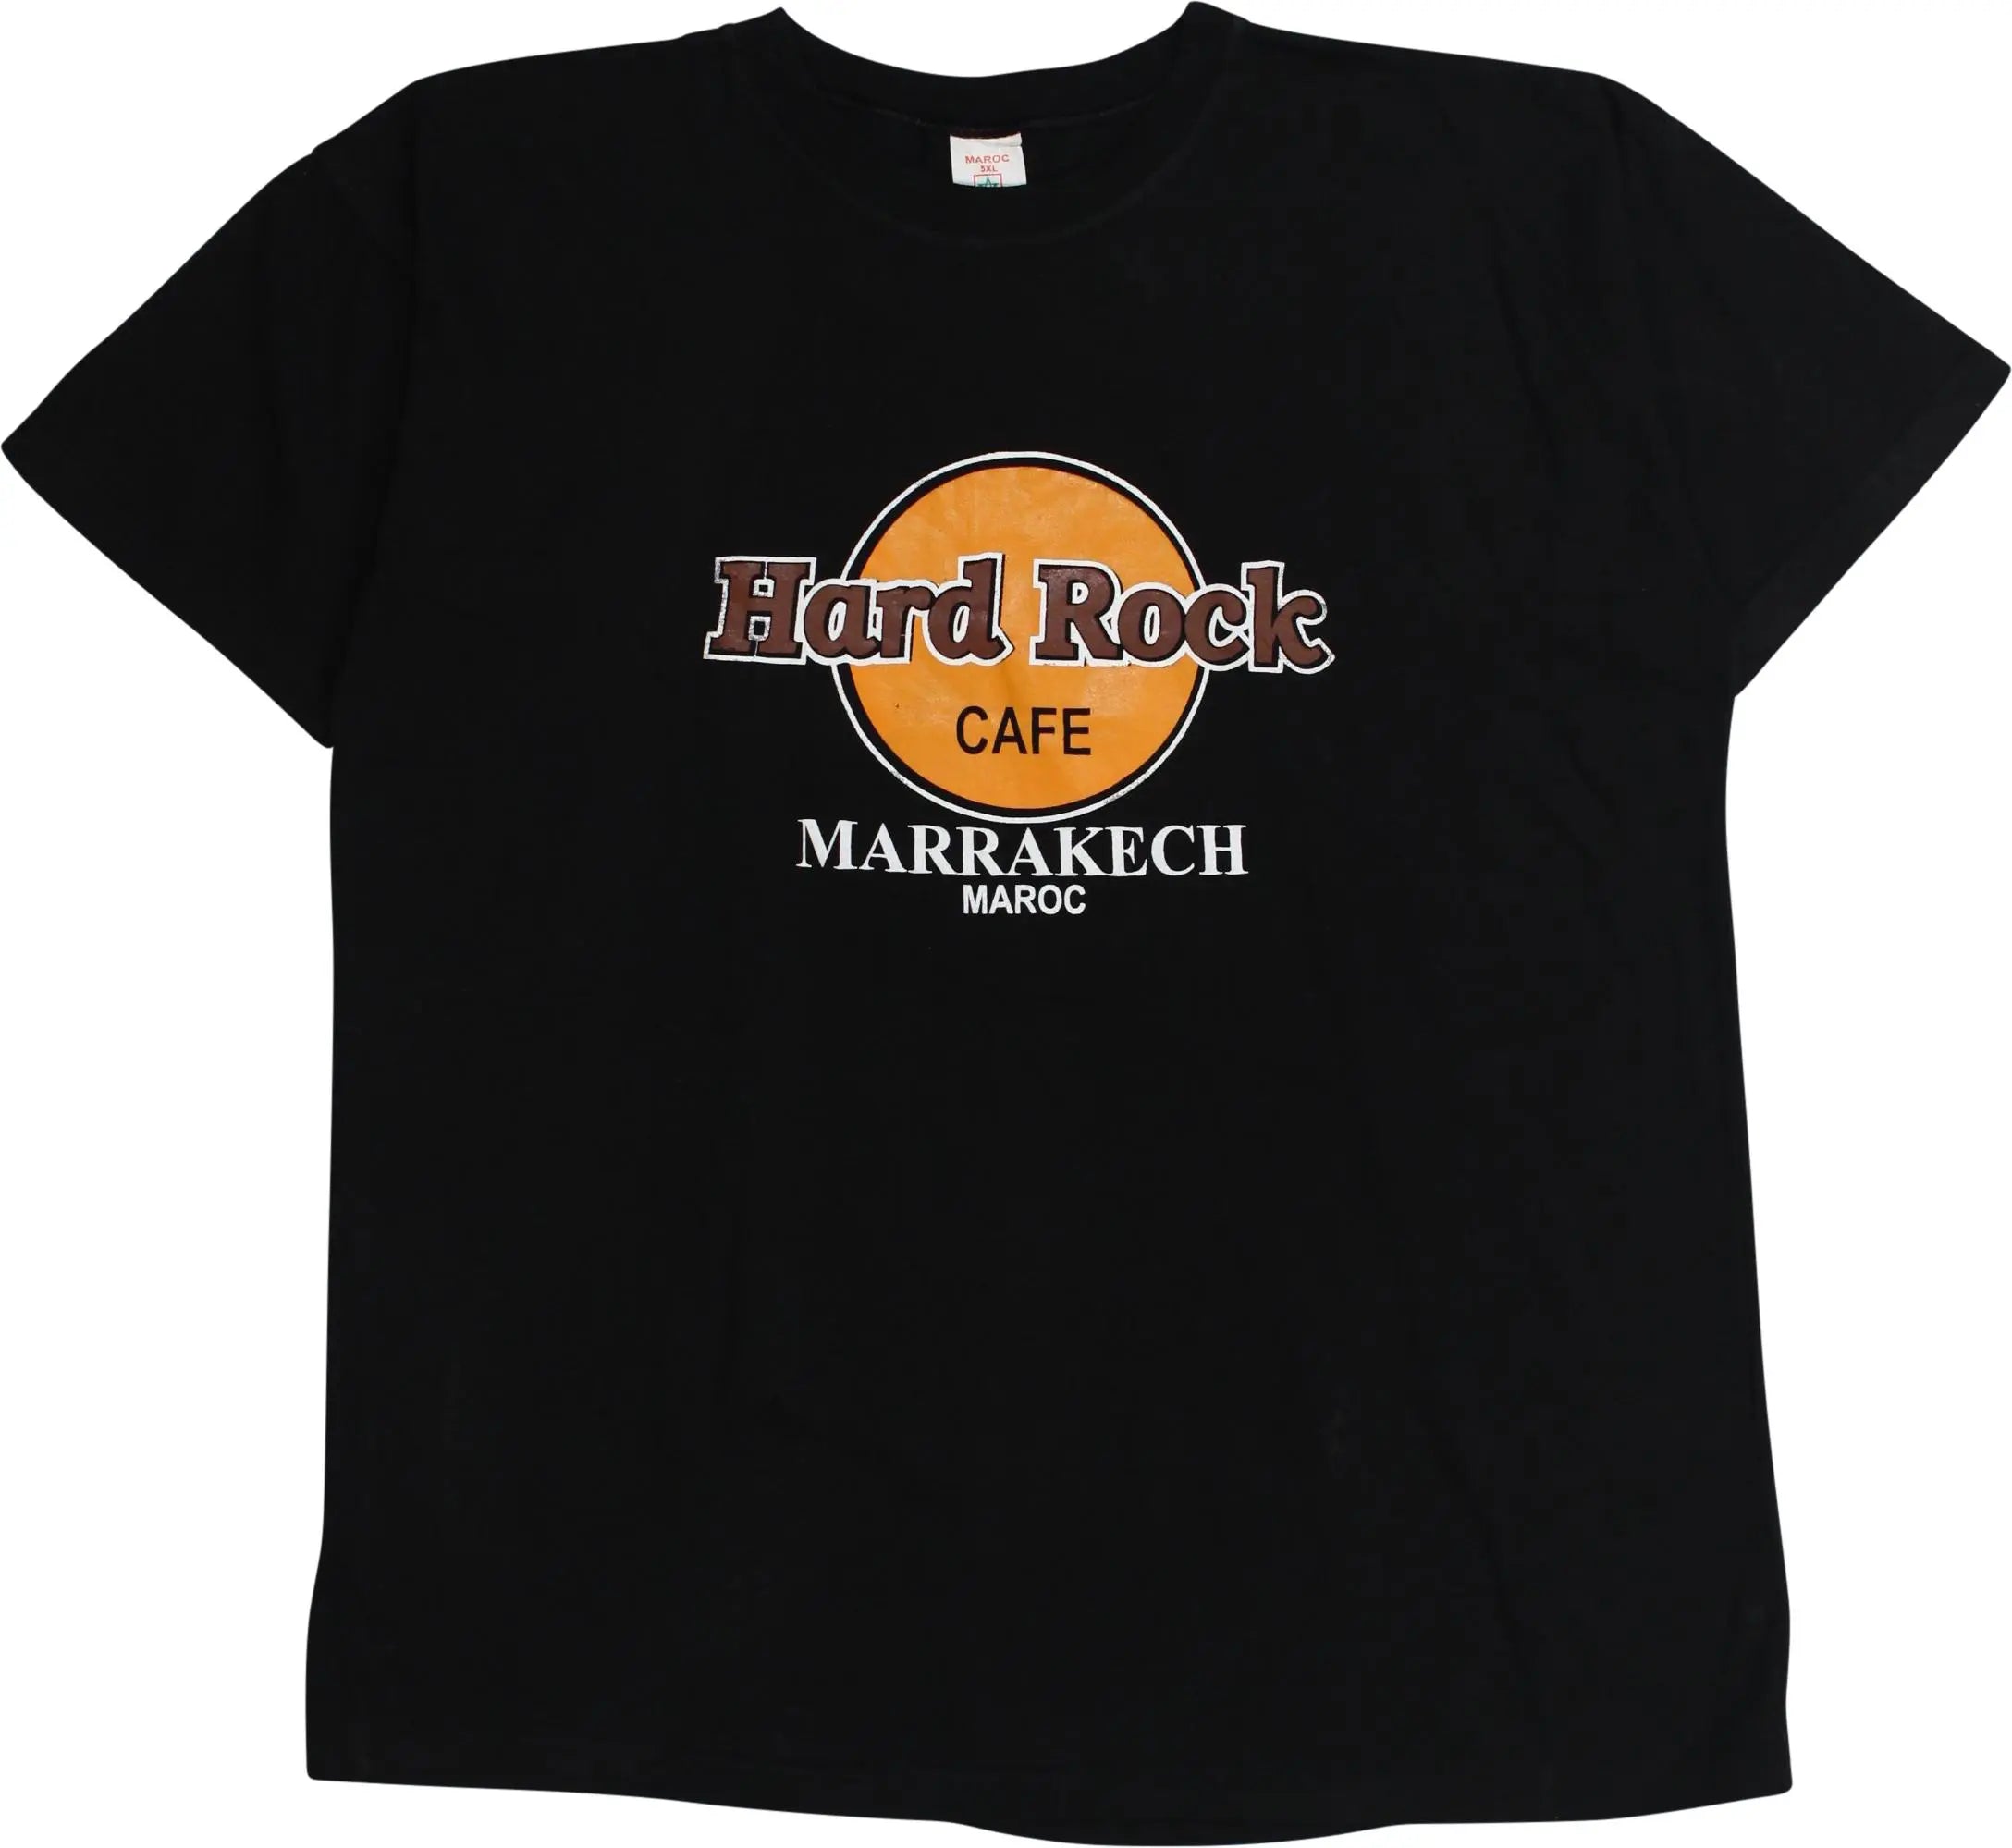 Hard Rock Cafe - Hard Rock Cafe T-Shirt- ThriftTale.com - Vintage and second handclothing